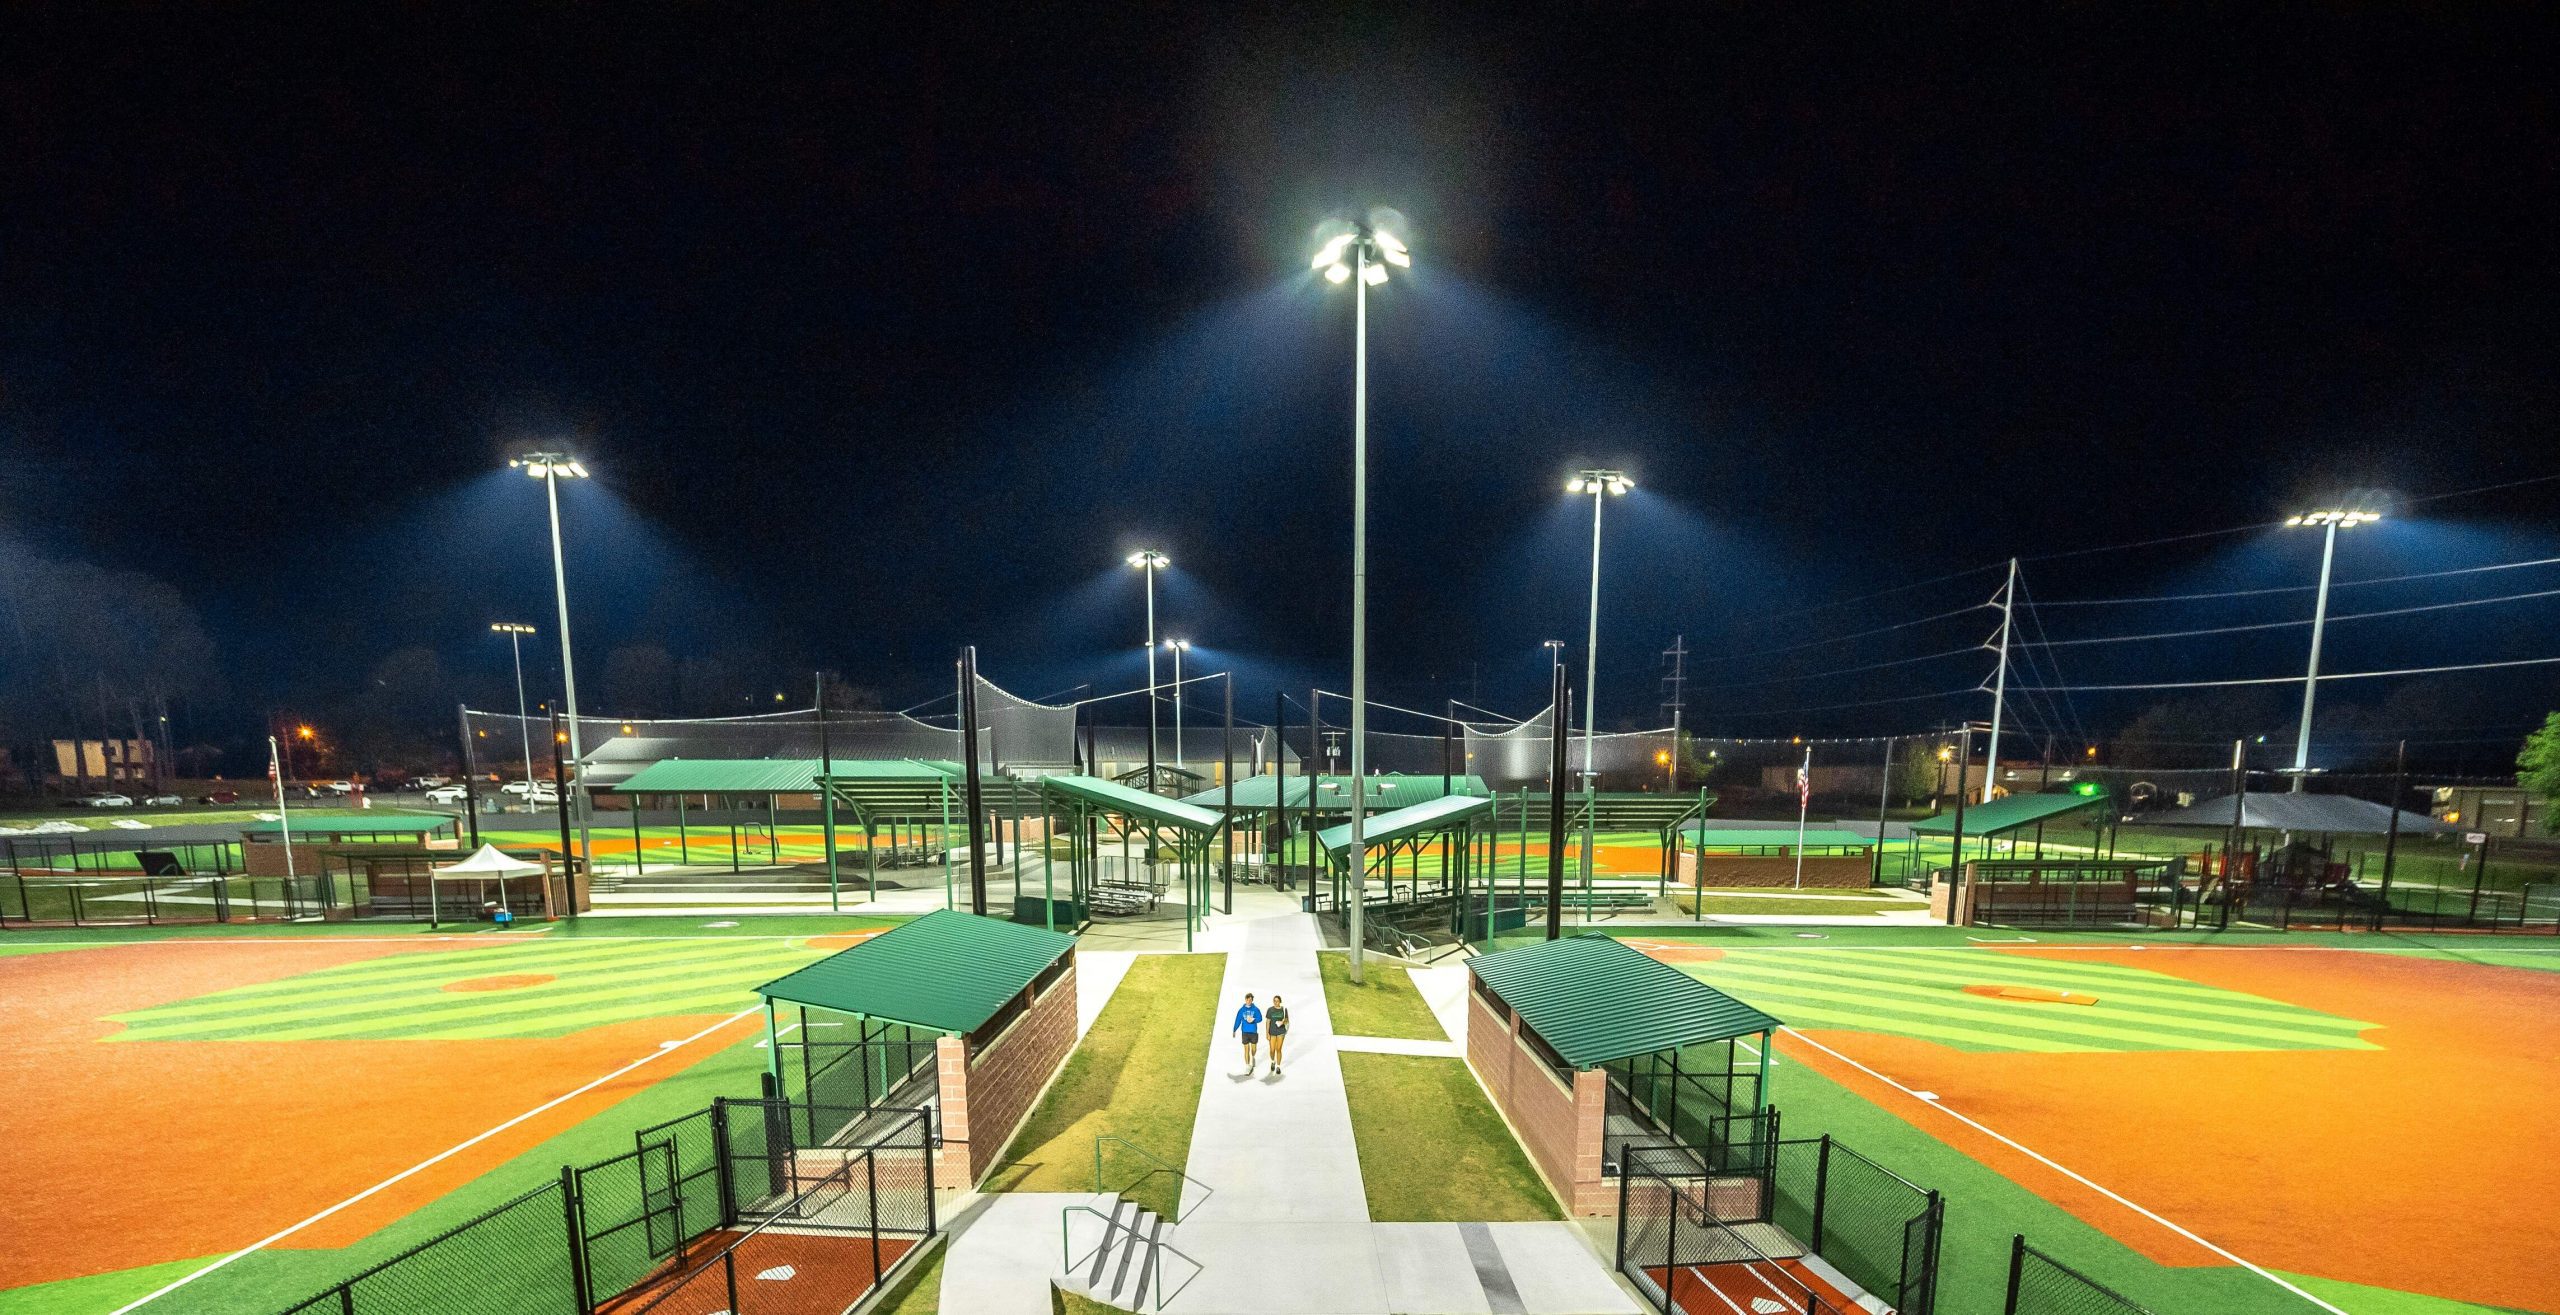 lighted baseball fields at Majestic Park in Arkansas